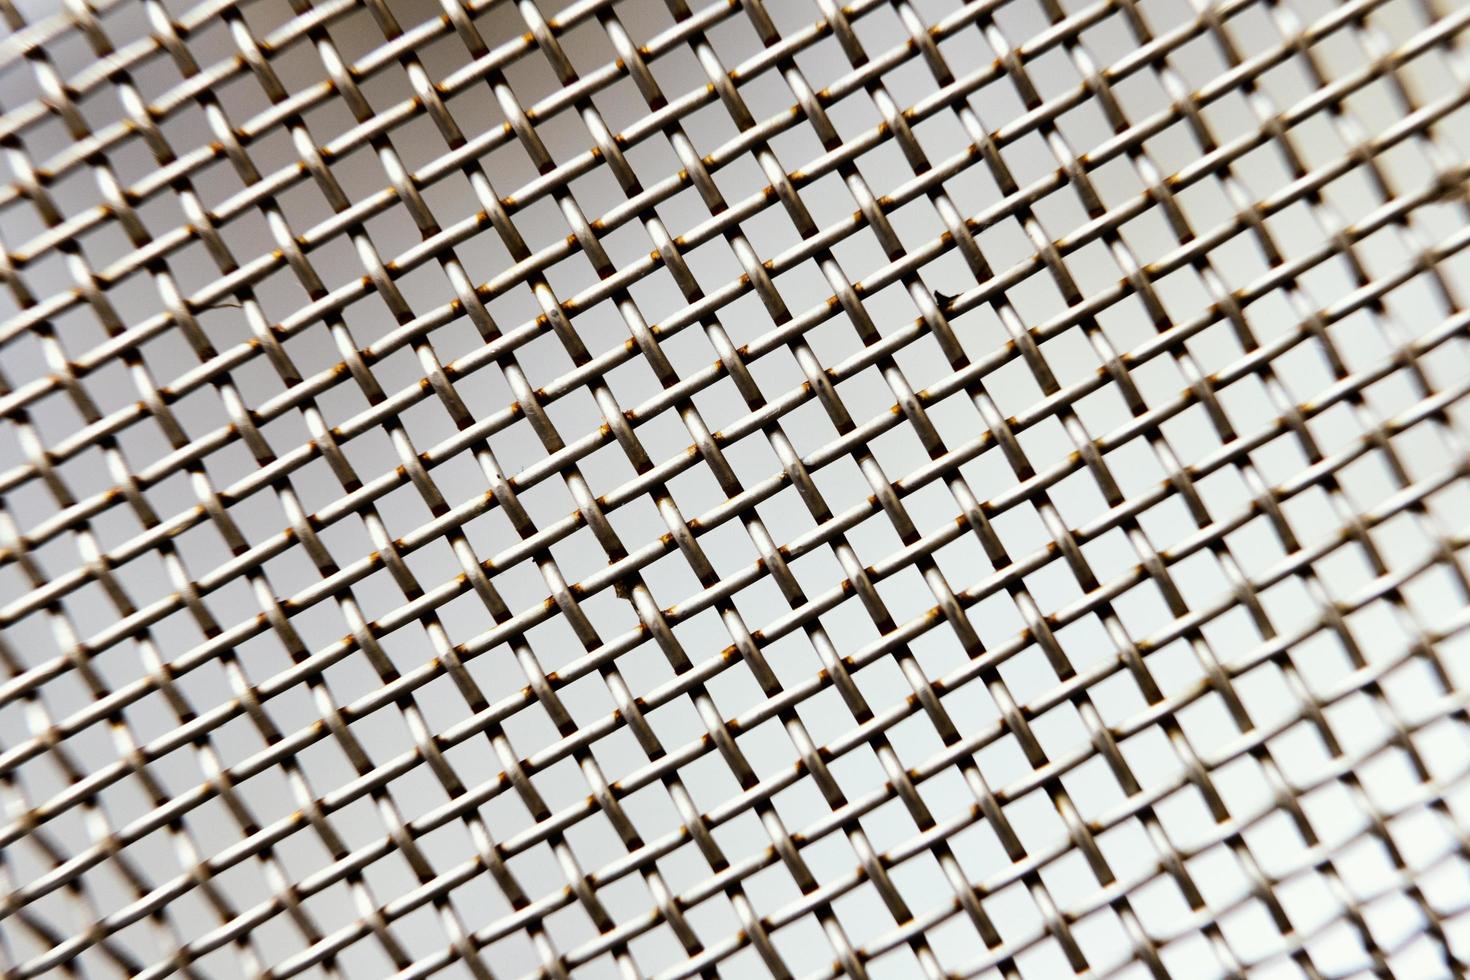 Rough metallic surface texture background photo